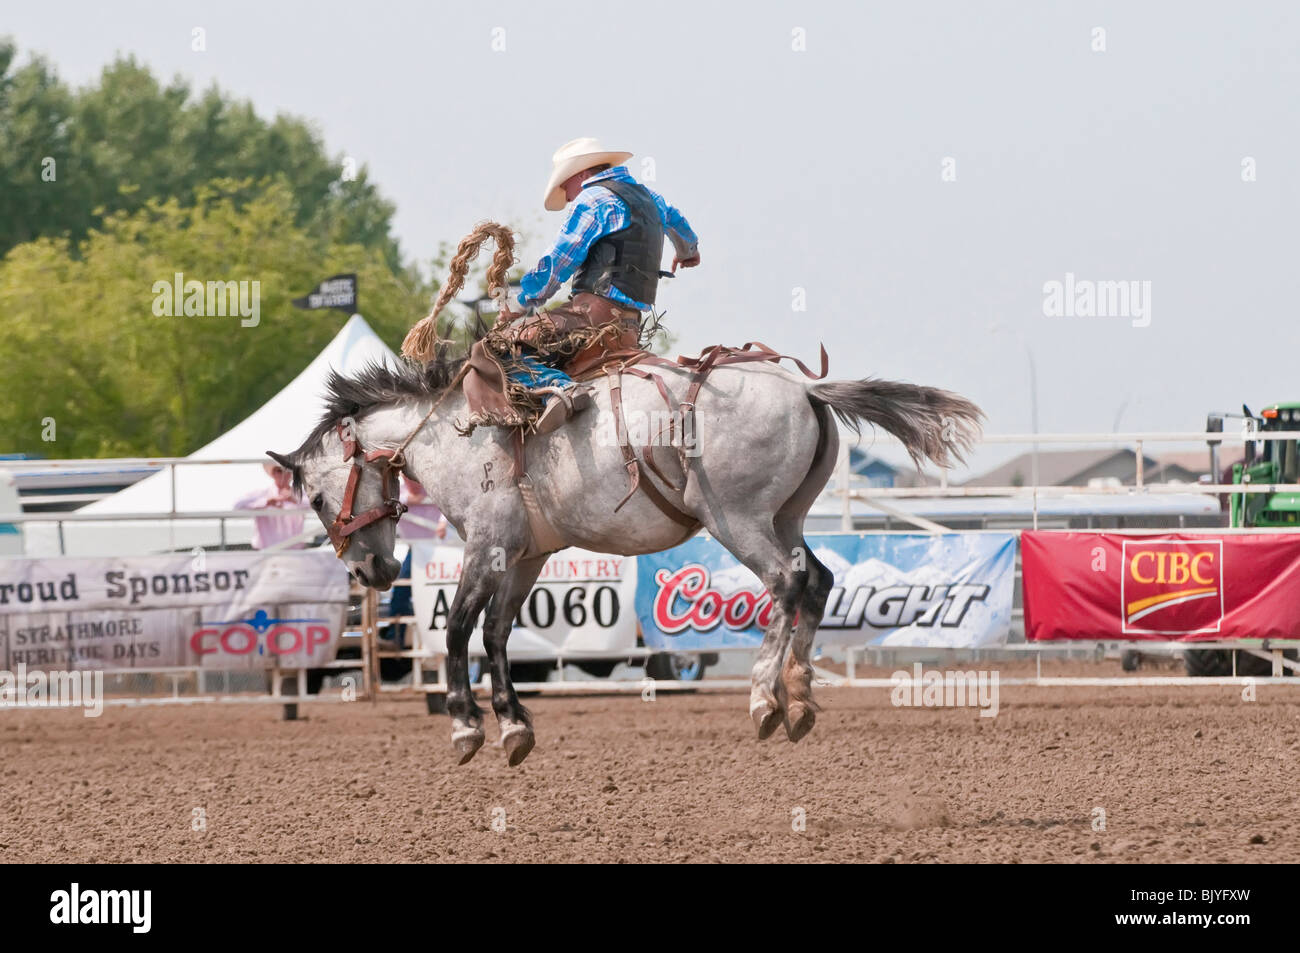 Cowboy, saddle bronc riding, Strathmore Heritage Days, Rodeo, Strathmore, Alberta, Canada Stock Photo